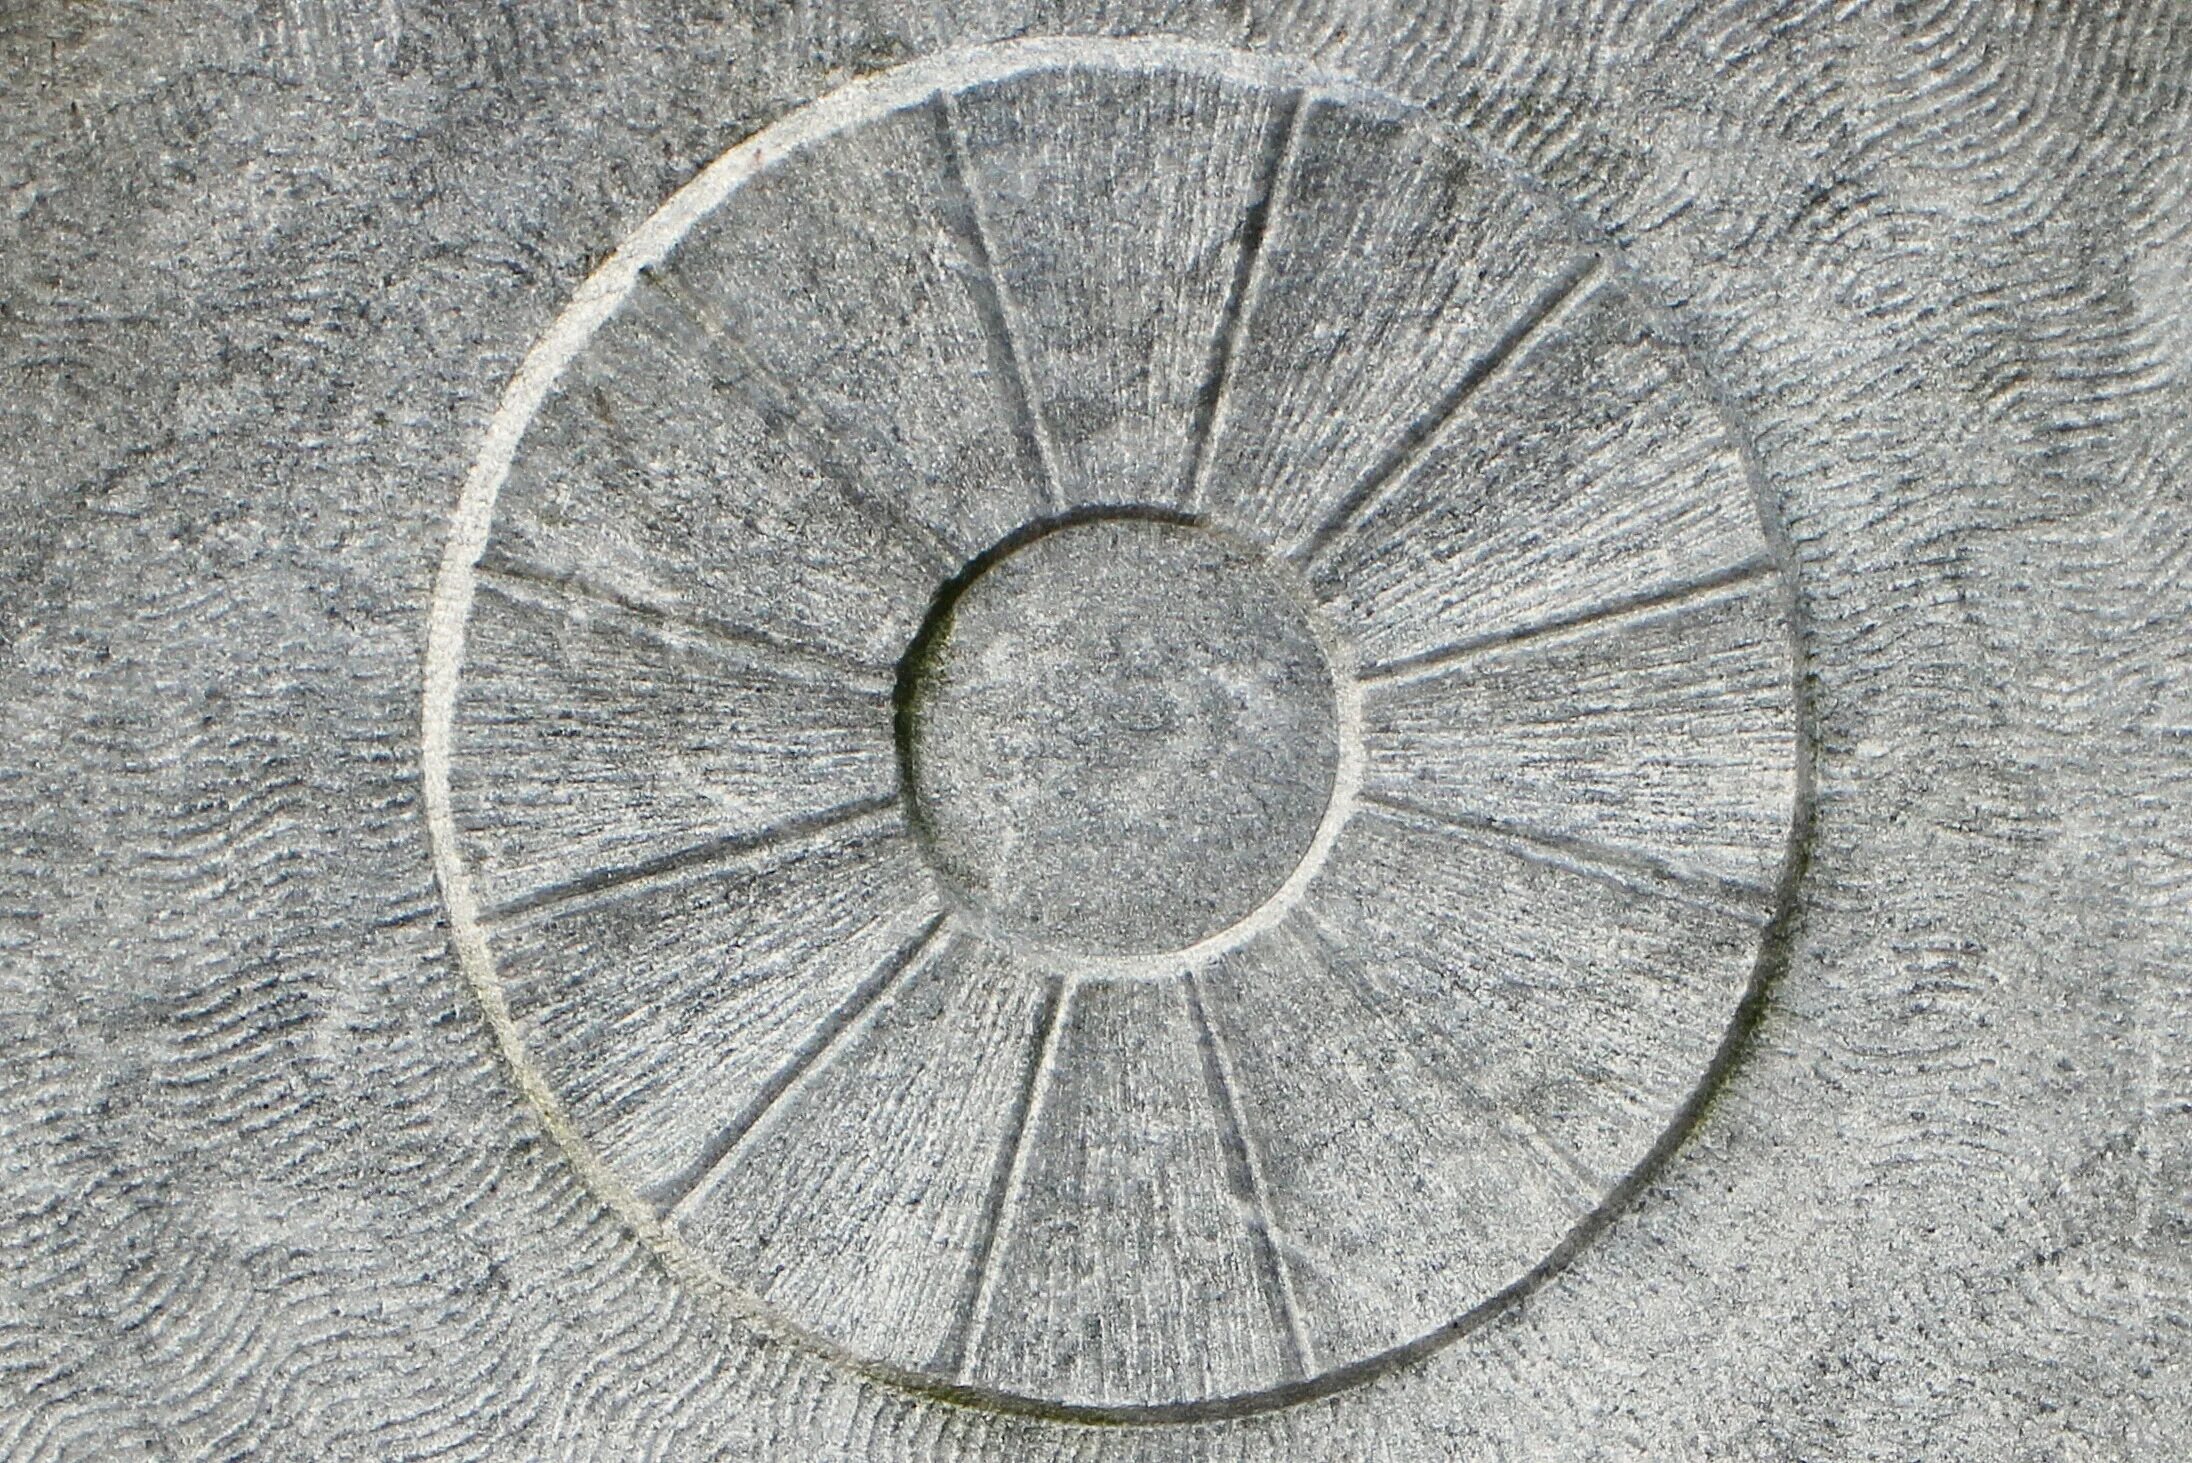 Колесо круг или окружность. Каменное колесо. Каменный круг. Круг в круге. Круг в древности.